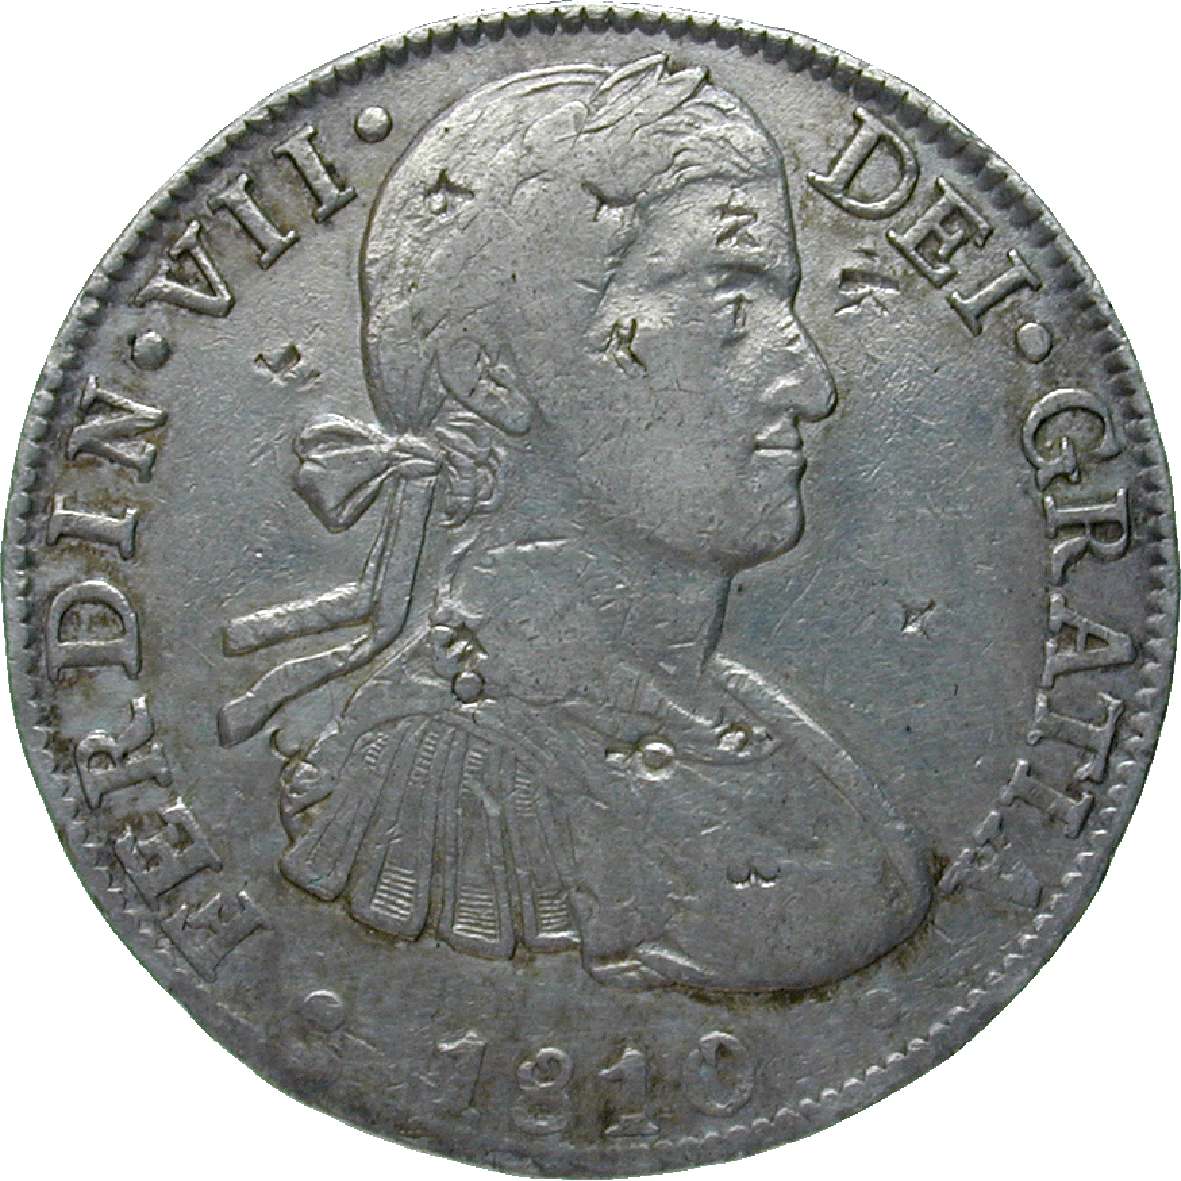 Mexico-China, Ferdinand VII of Spain, Real de a Ocho (Peso) 1810 (obverse)